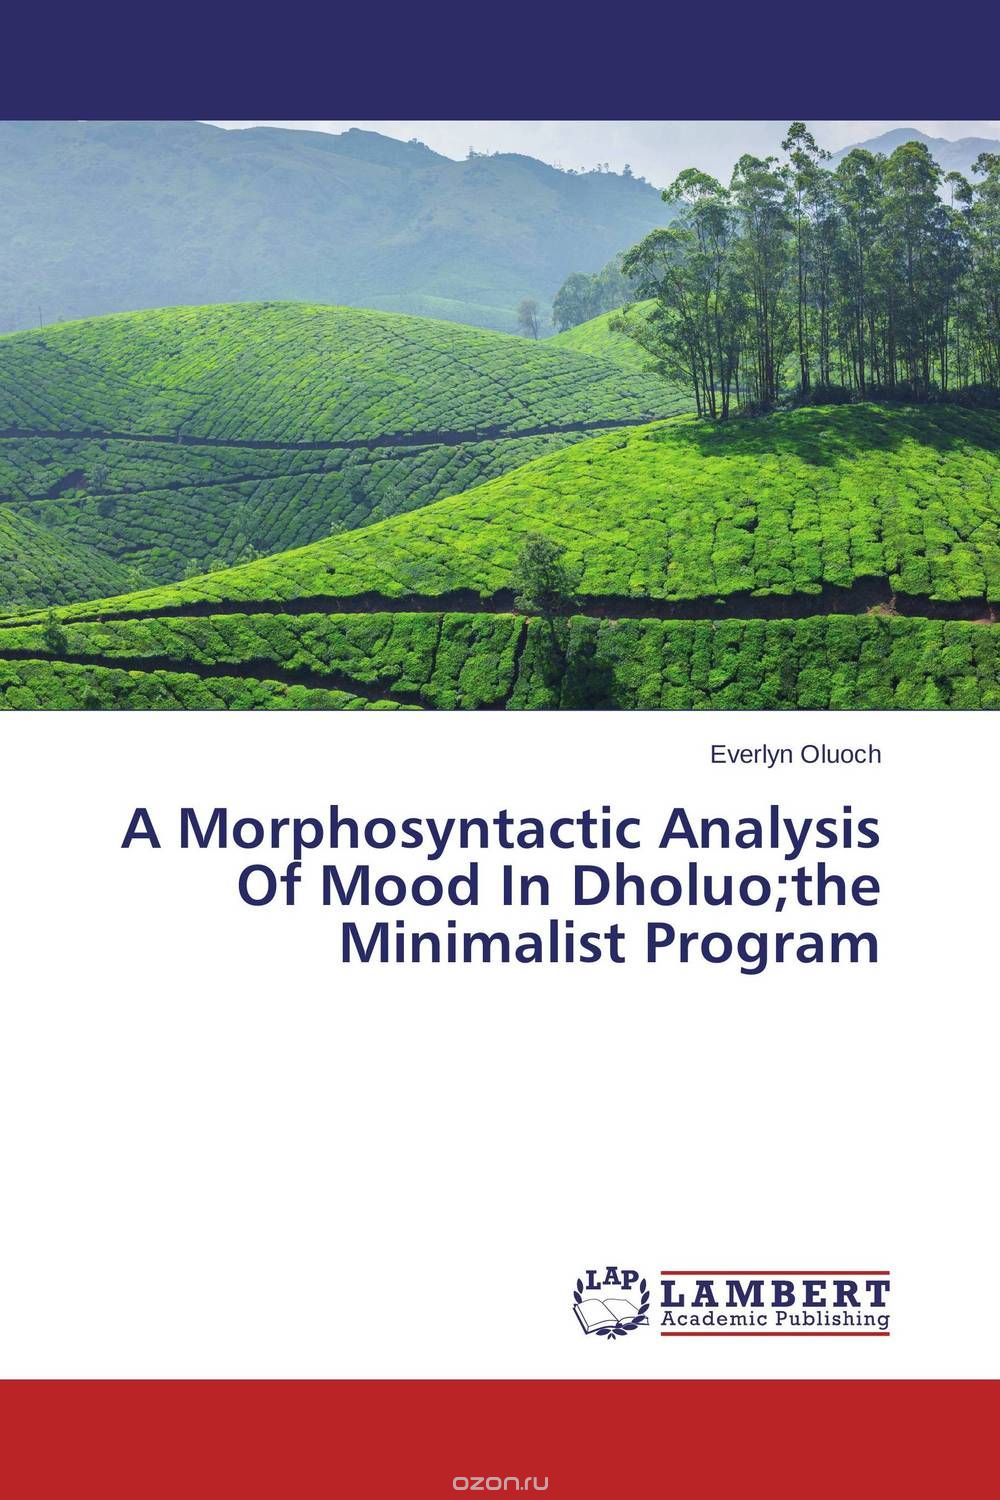 Скачать книгу "A Morphosyntactic Analysis Of Mood In Dholuo;the Minimalist Program"